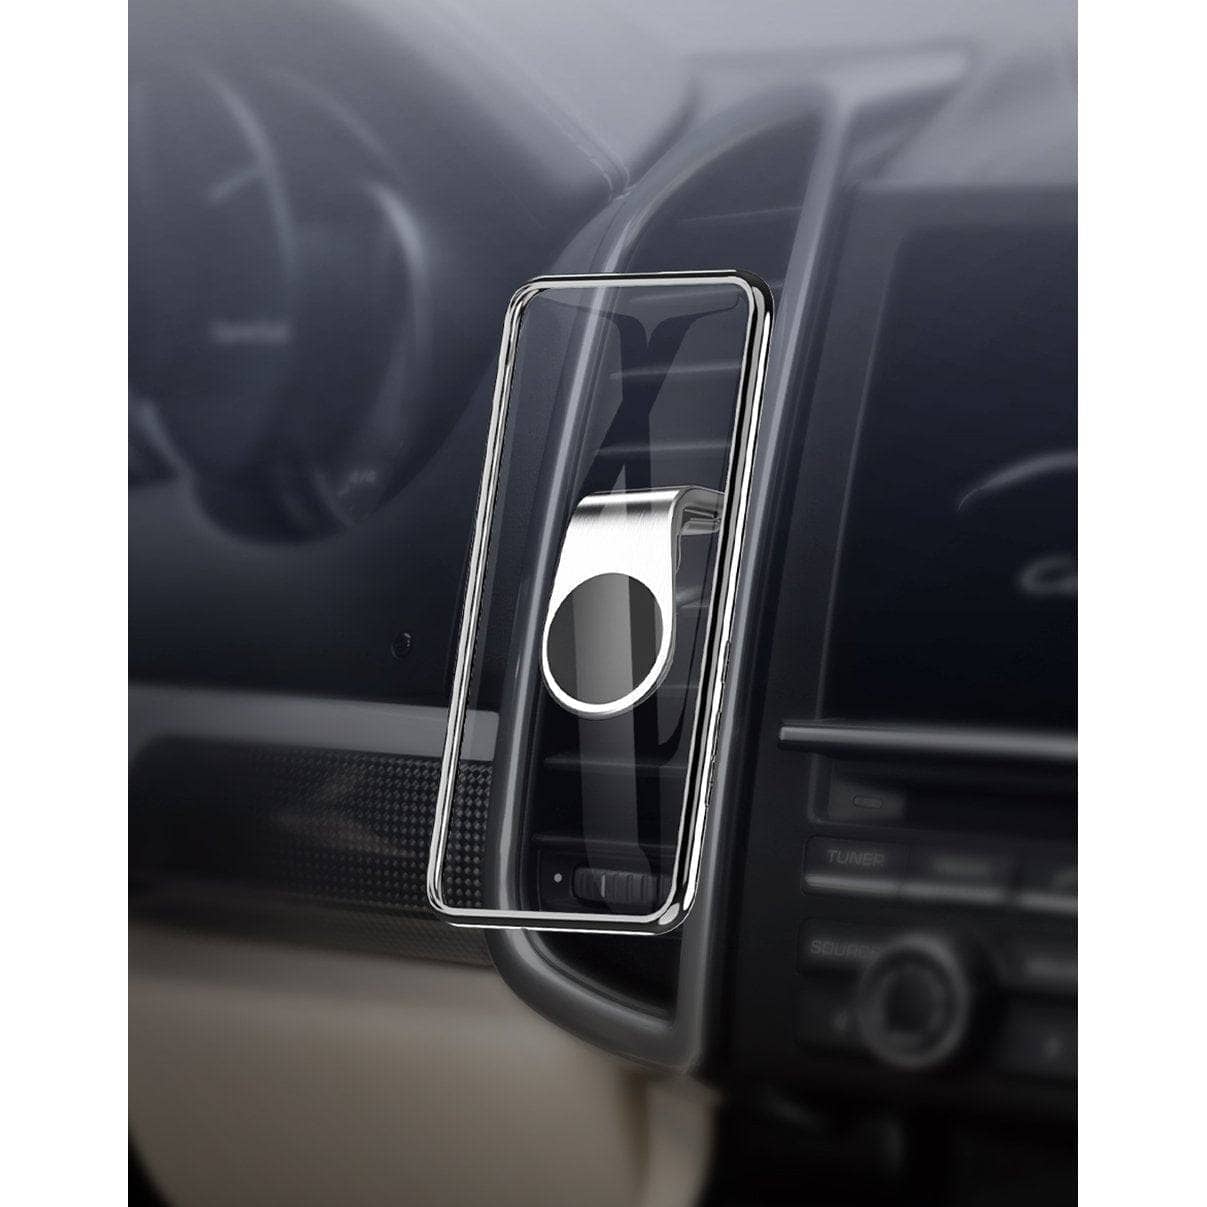 Magnetic Air Vent Car Holder - Black Slim L Shap-Holders-Generic-www.PhoneGuy.com.au